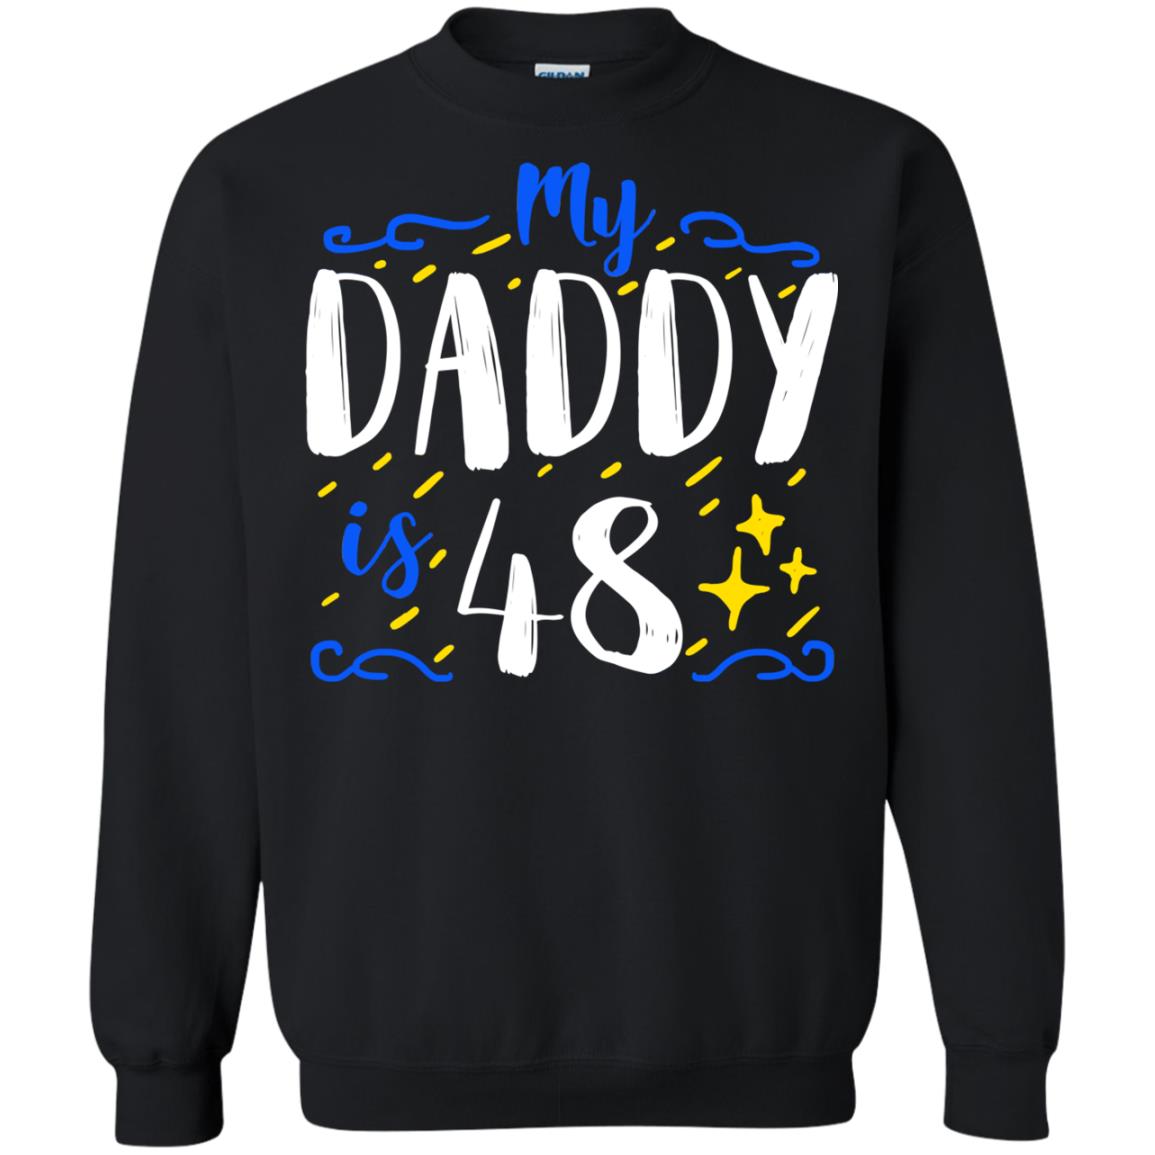 My Daddy Is 48 48th Birthday Daddy Shirt For Sons Or DaughtersG180 Gildan Crewneck Pullover Sweatshirt 8 oz.